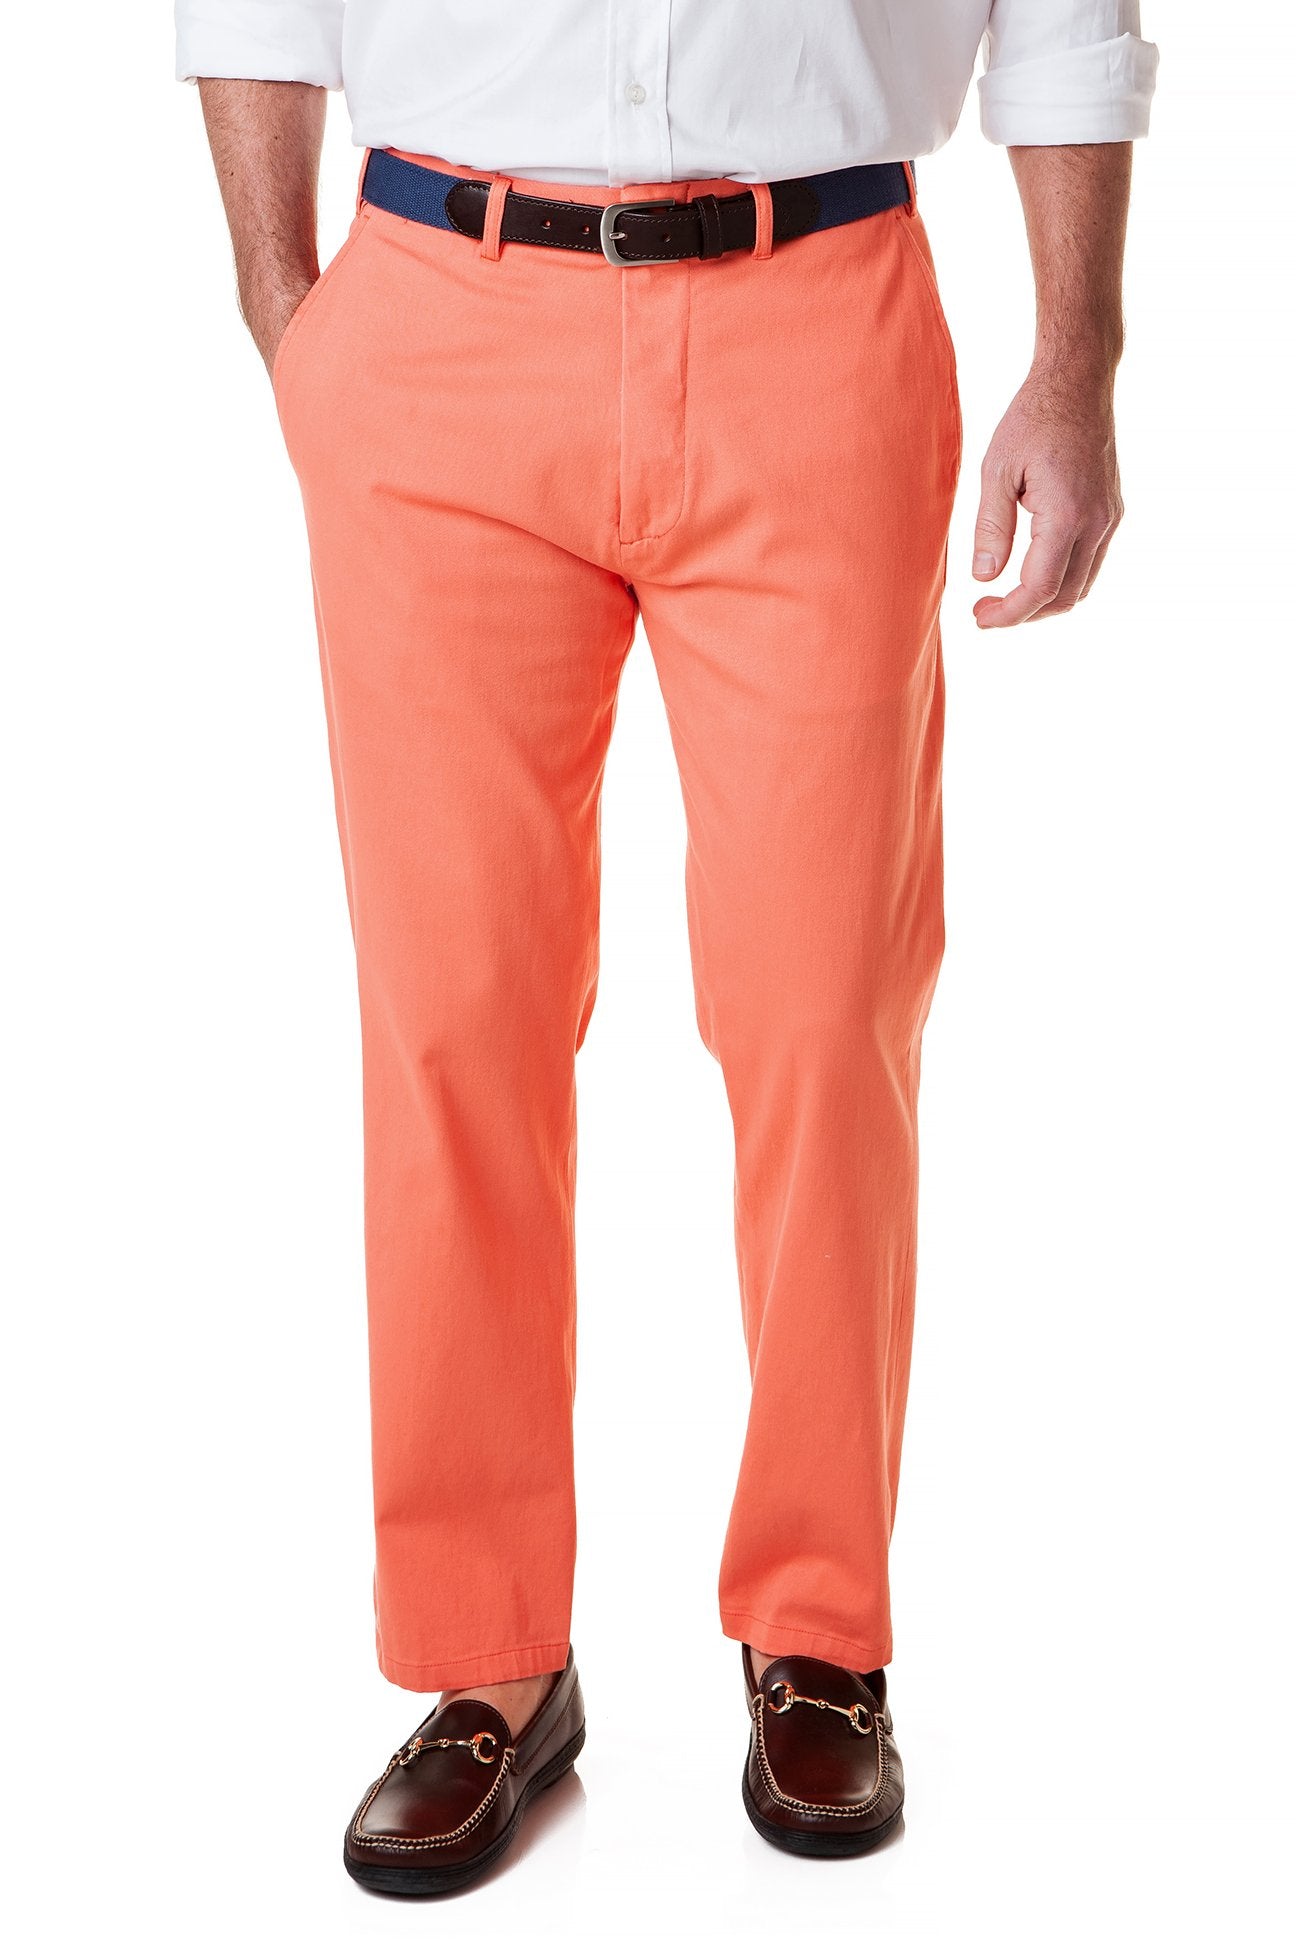 Castaway Mens Chino Stretch Twill Pant Coral Orange – Castaway